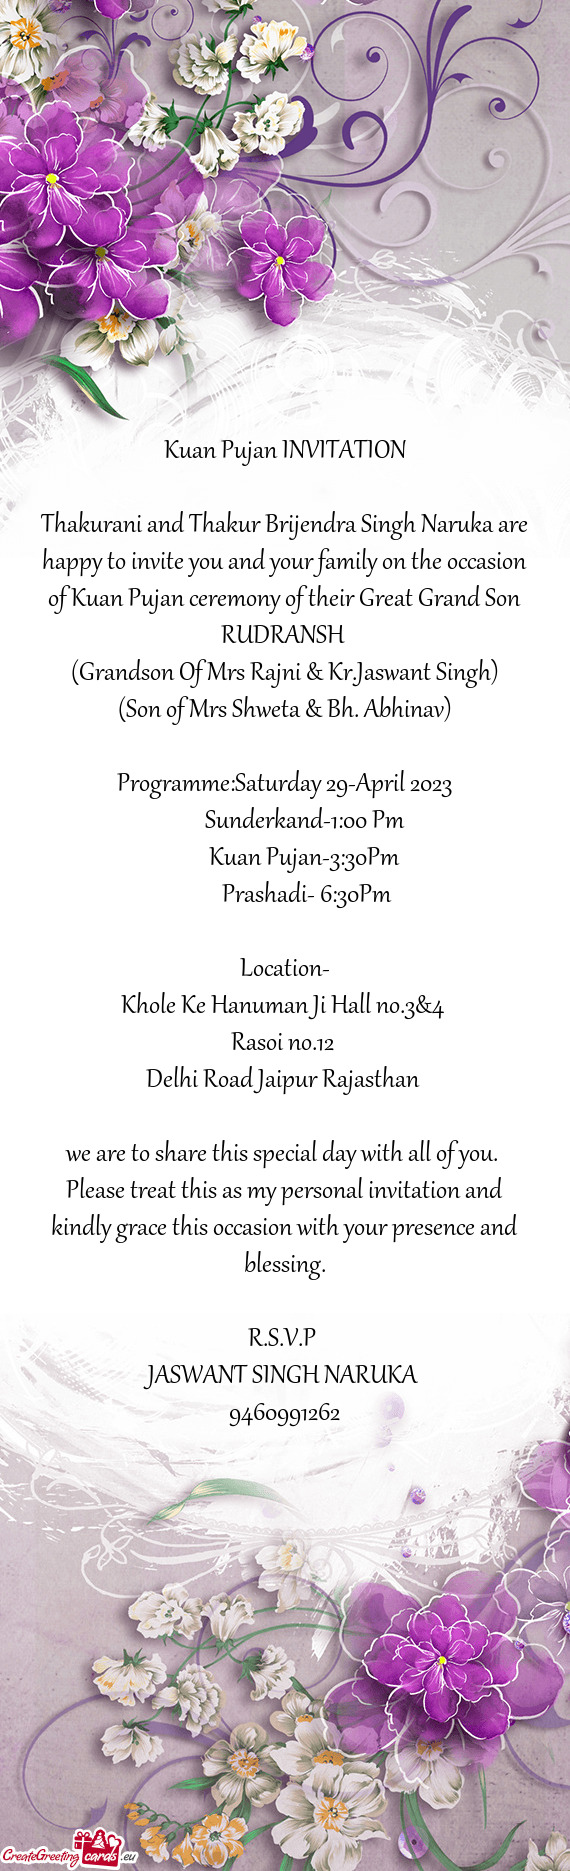 Thakurani and Thakur Brijendra Singh Naruka are happy to invite you and your family on the occasion